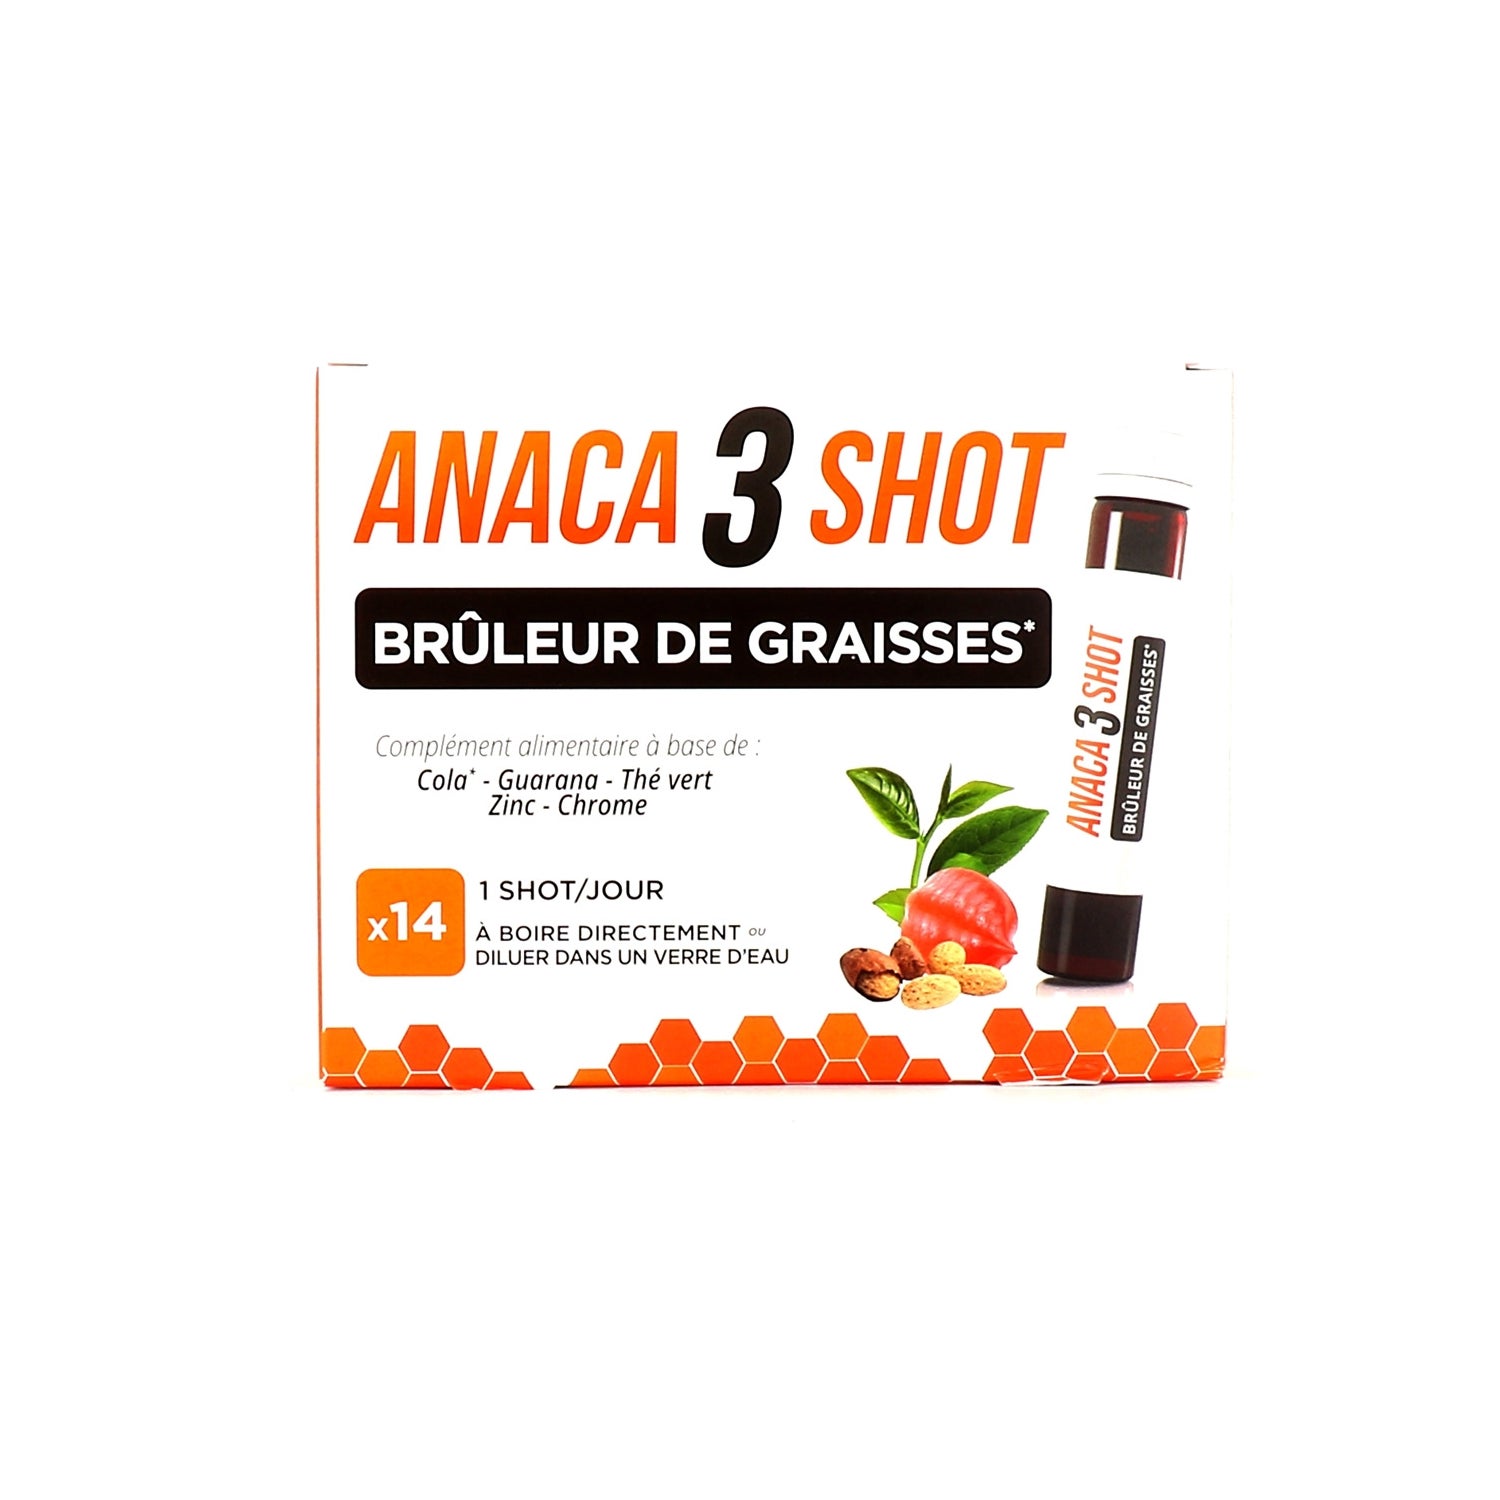 Anaca3 Shot Ventre plat - 14 shots